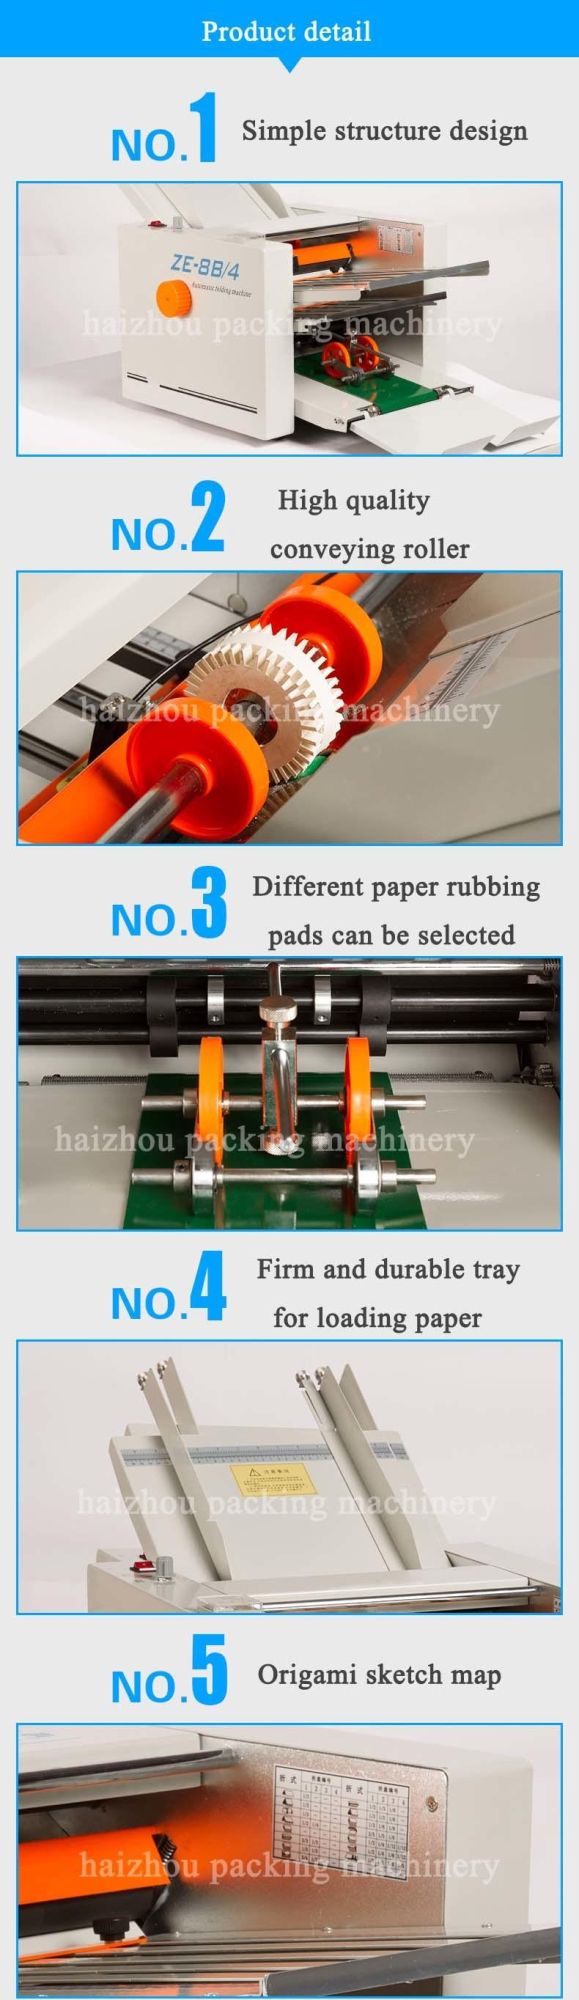 Automatic Folding Machine Paper/Auto Folder Specification Ze-8b/4